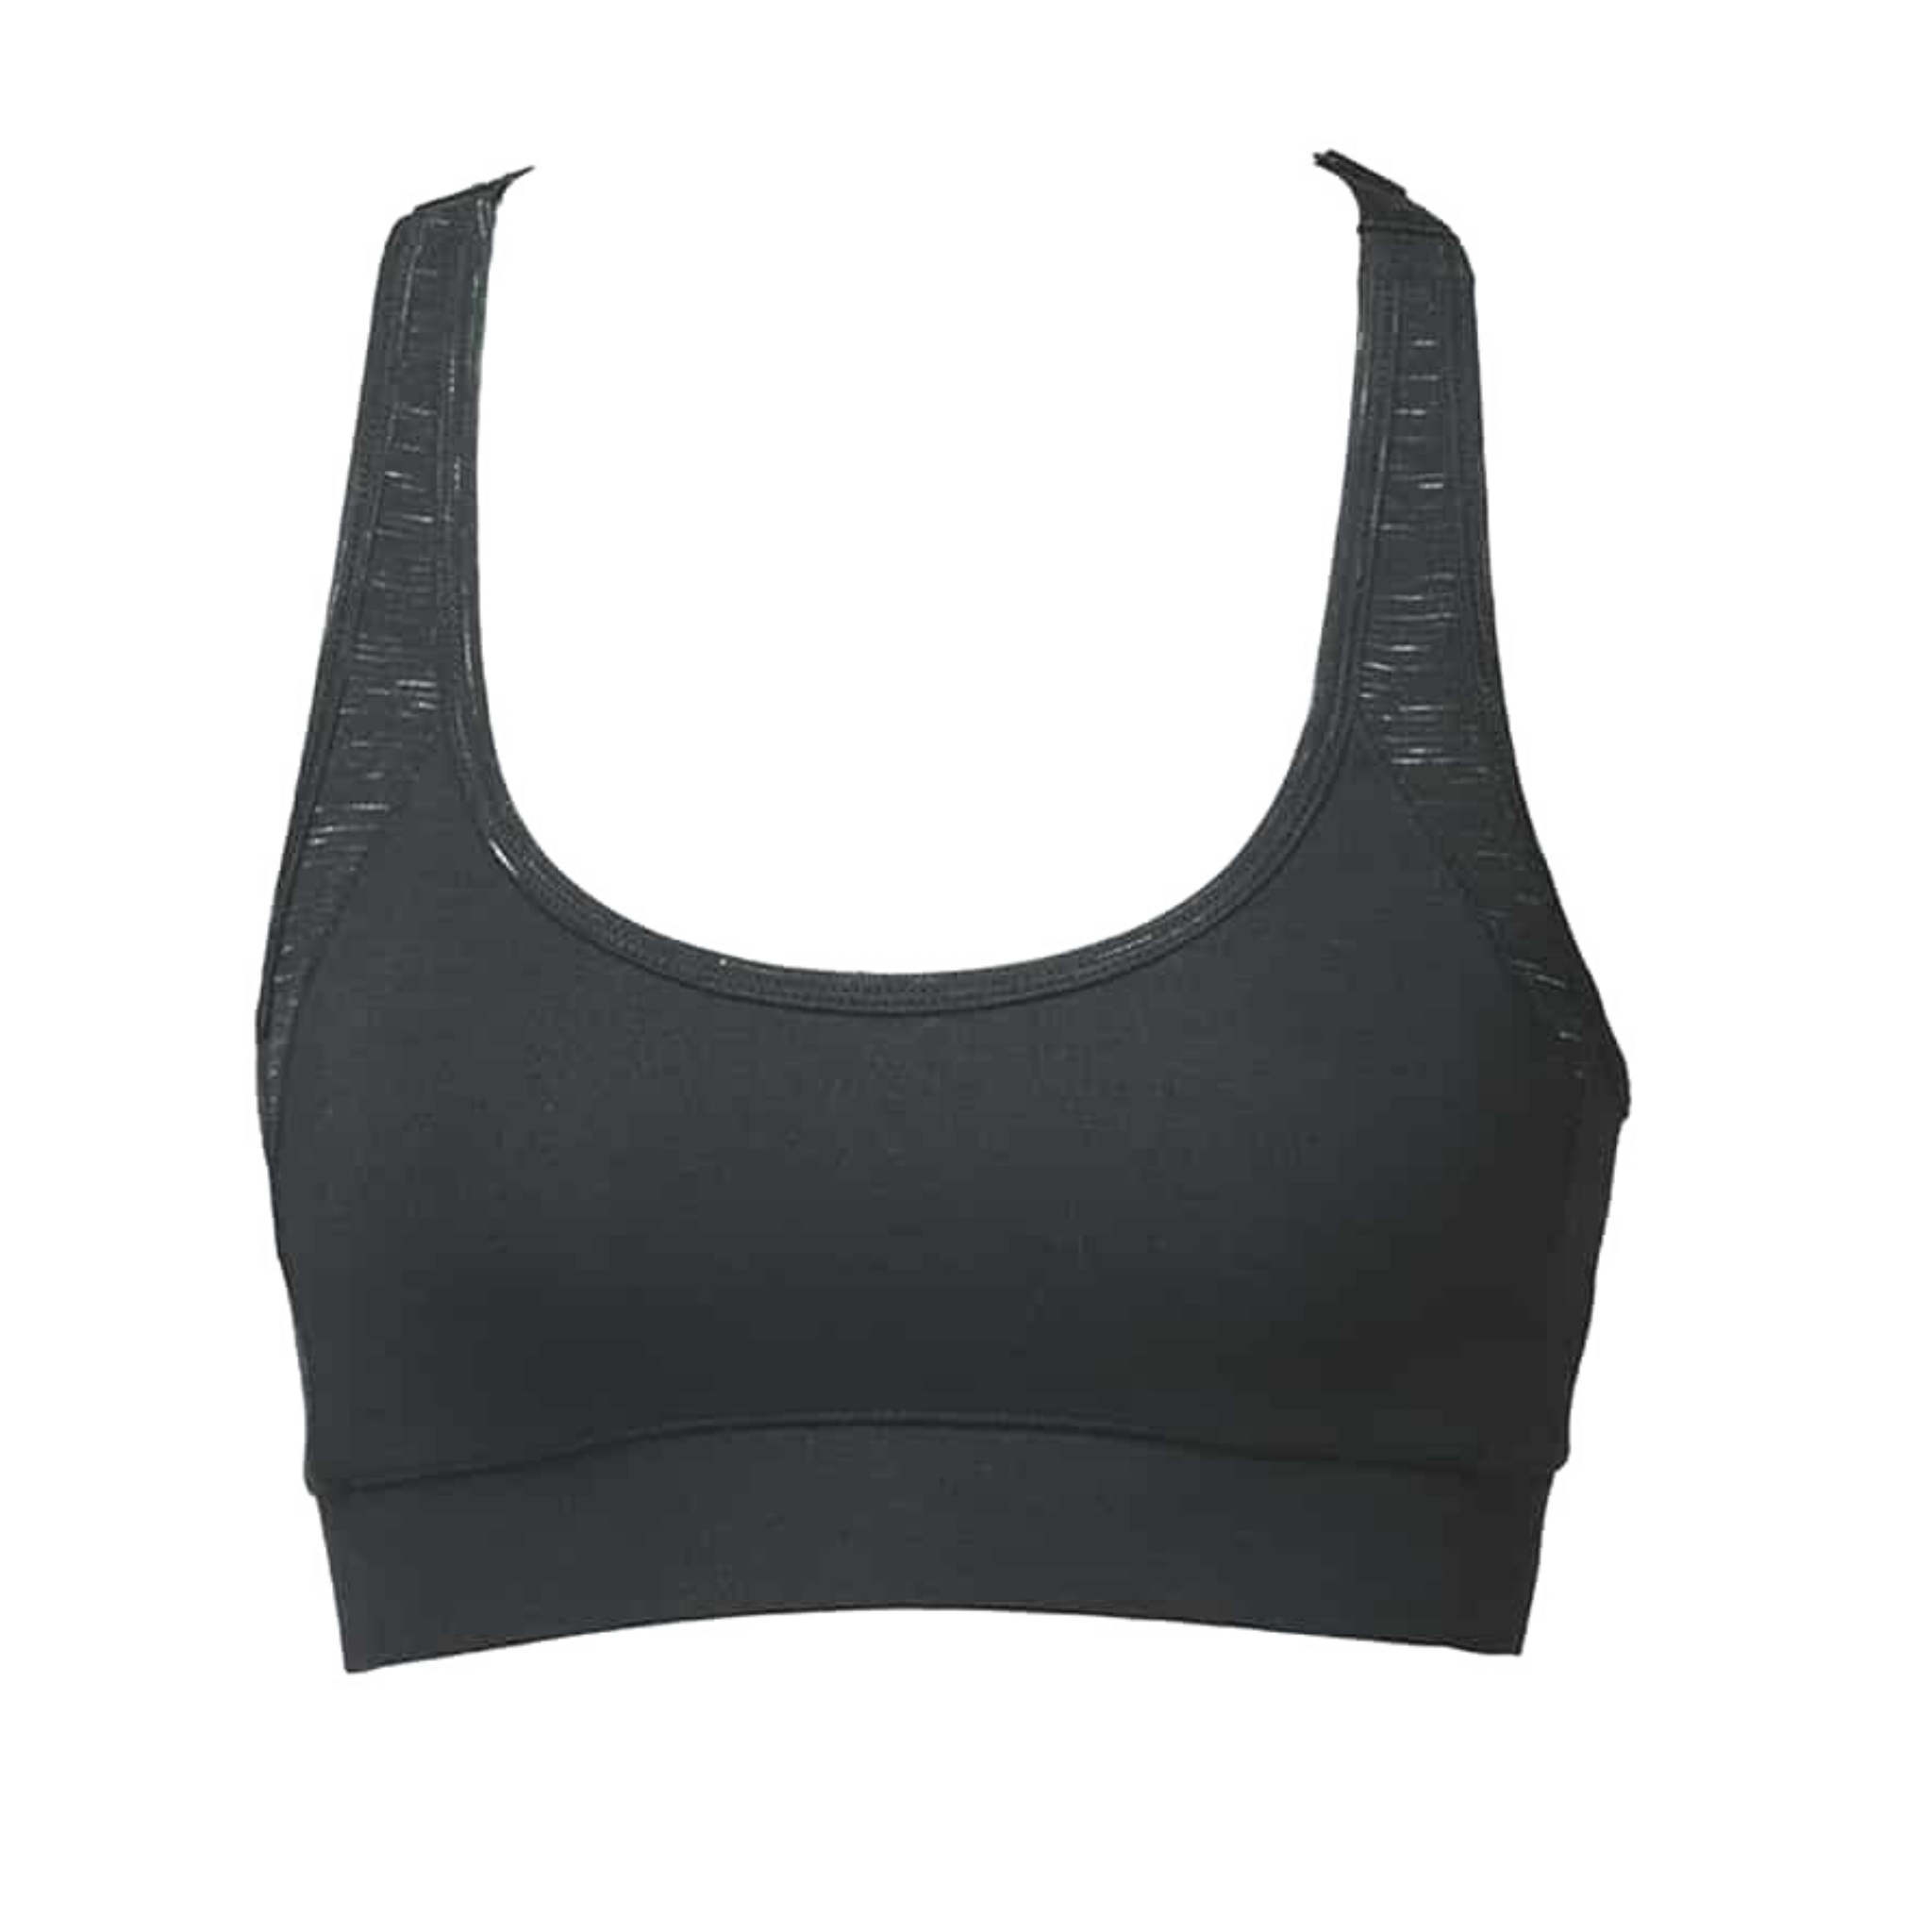 NWT size medium fleo sports bra  Sports bra, Bra, Clothes design